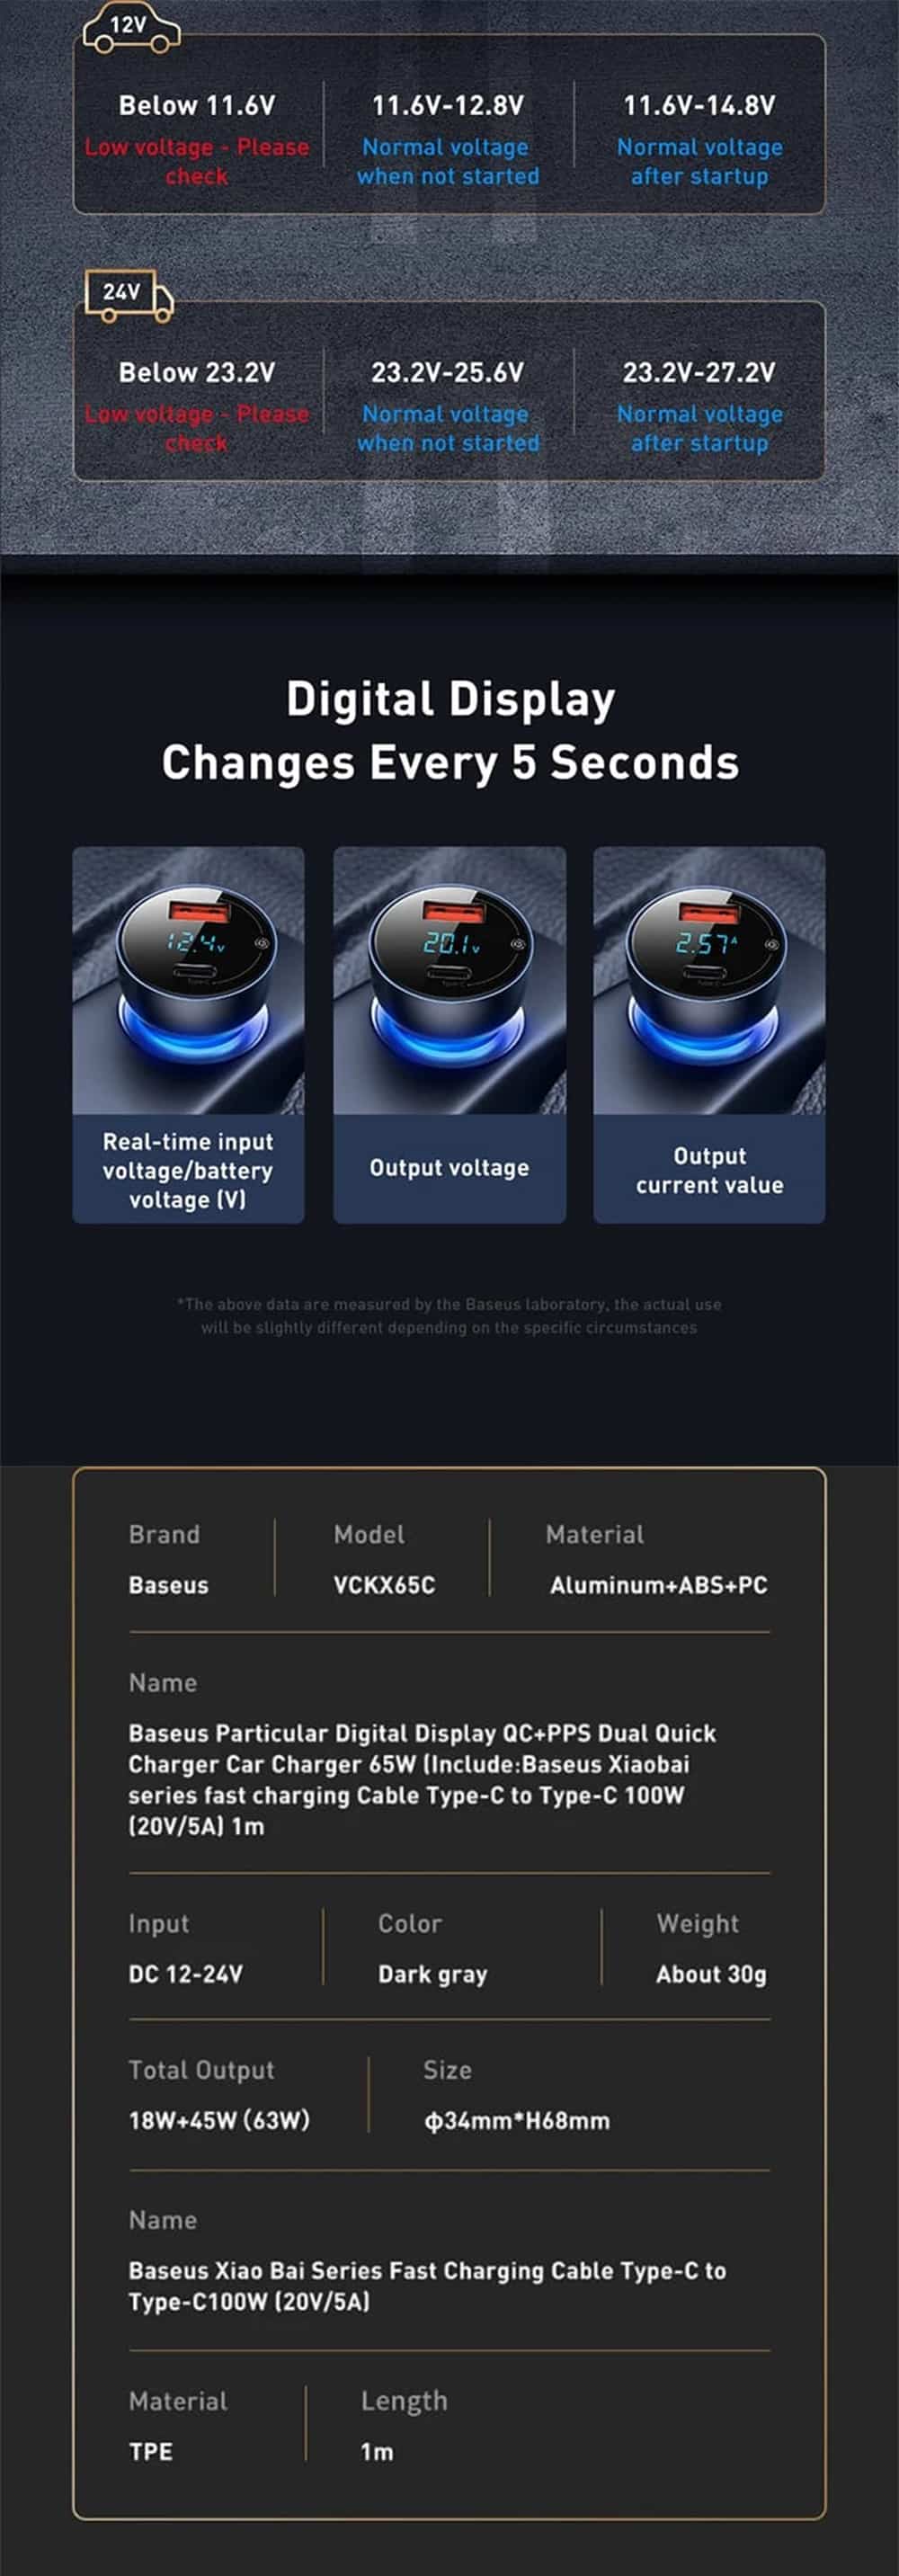 Baseus Particular Digital Display QCPPS Dual Port 65W Car Charger Set 6